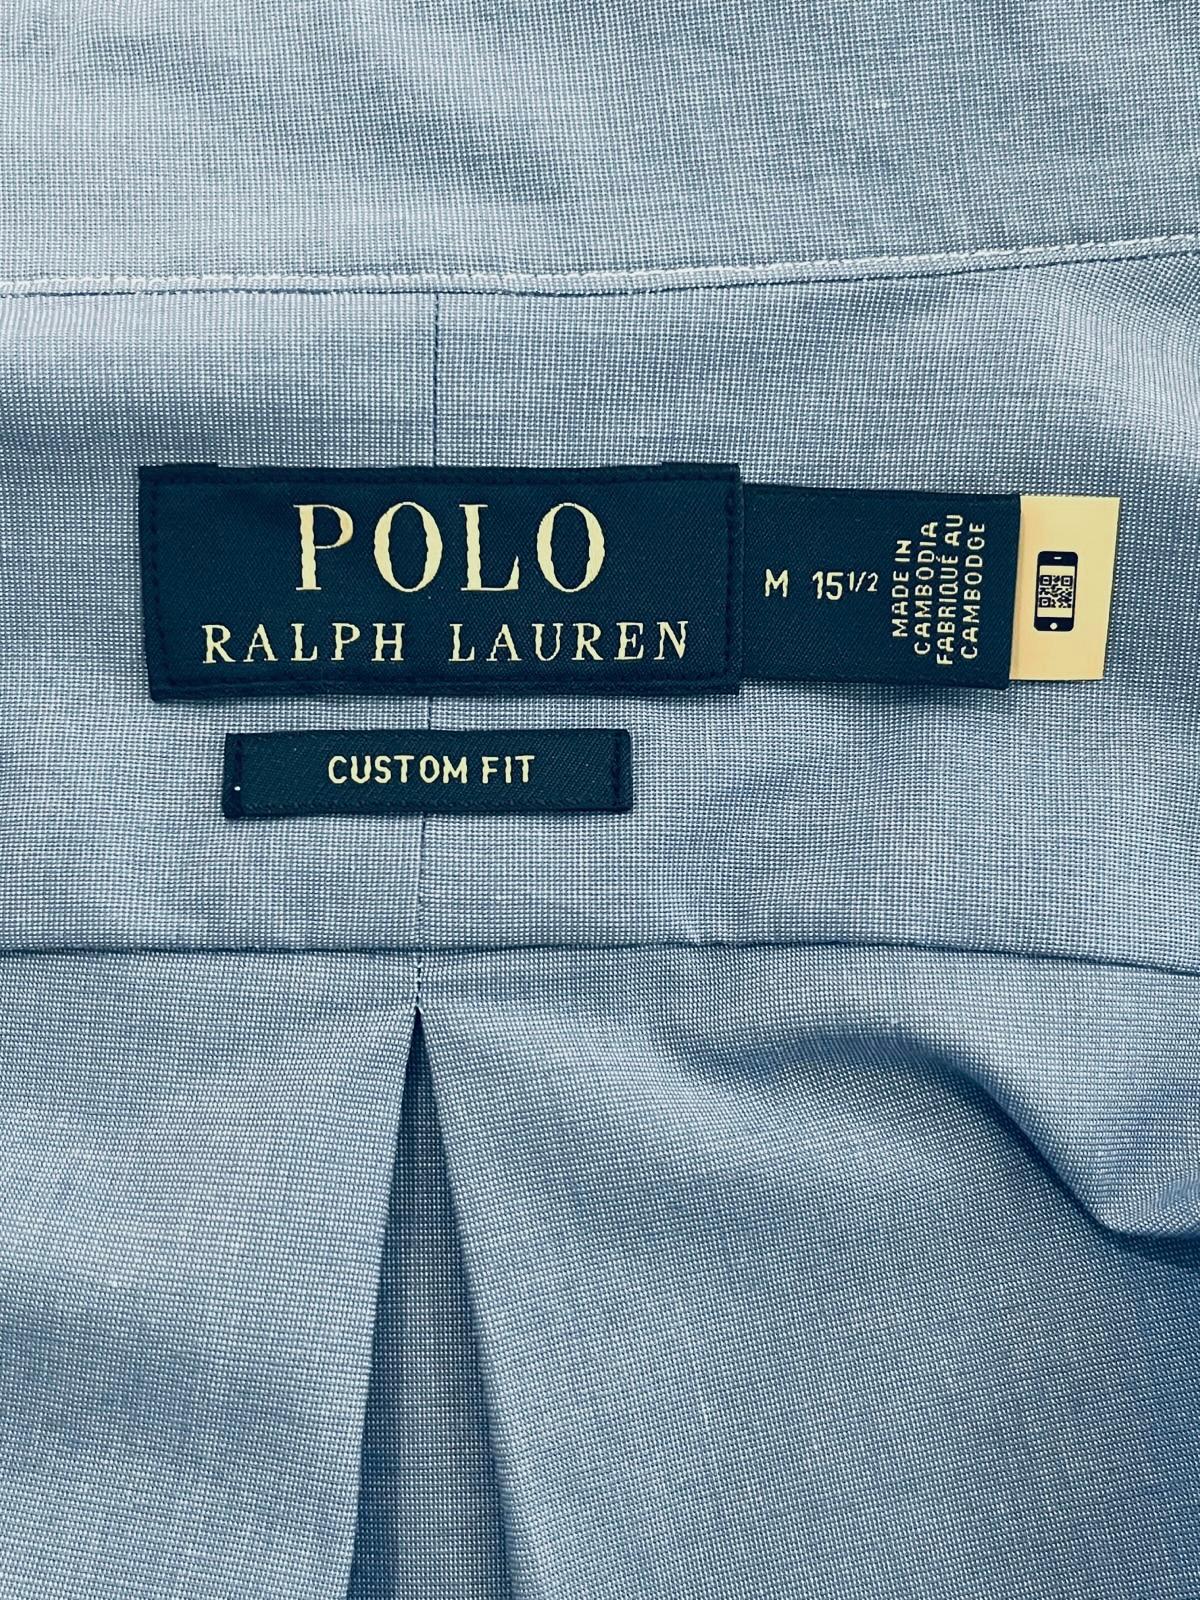 Polo Ralph Lauren Cotton Logo Shirt For Sale 2